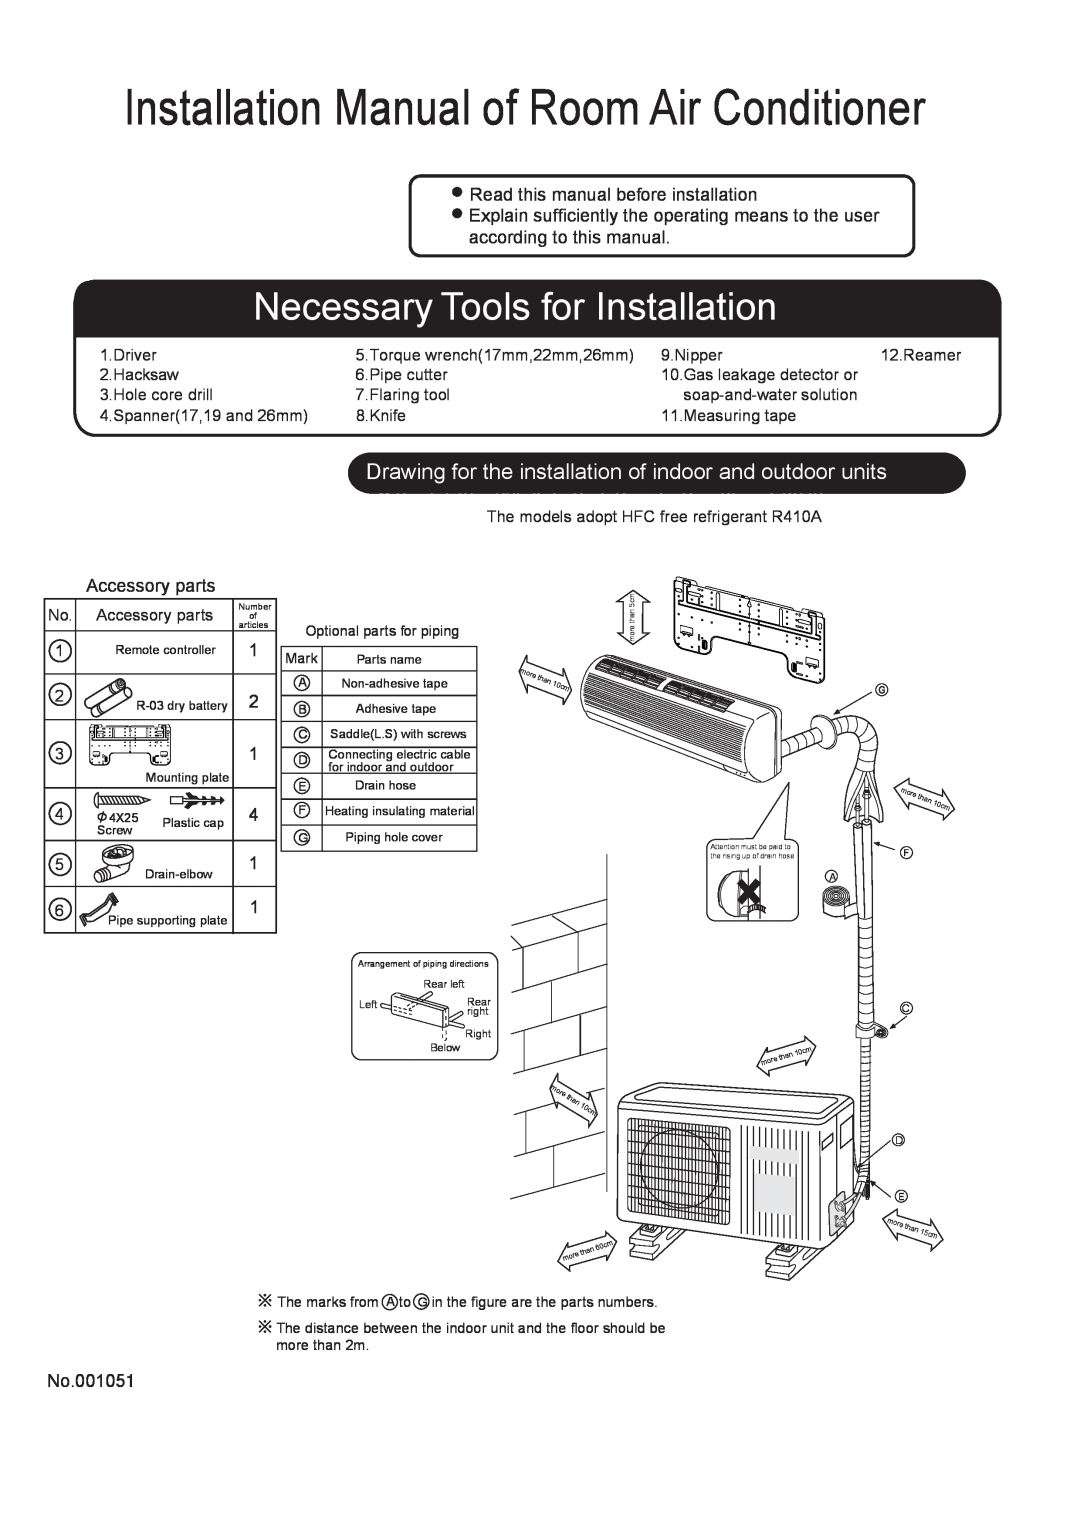 Haier 001051 installation manual Installation Manual of Room Air Conditioner, Necessary Tools for Installation 